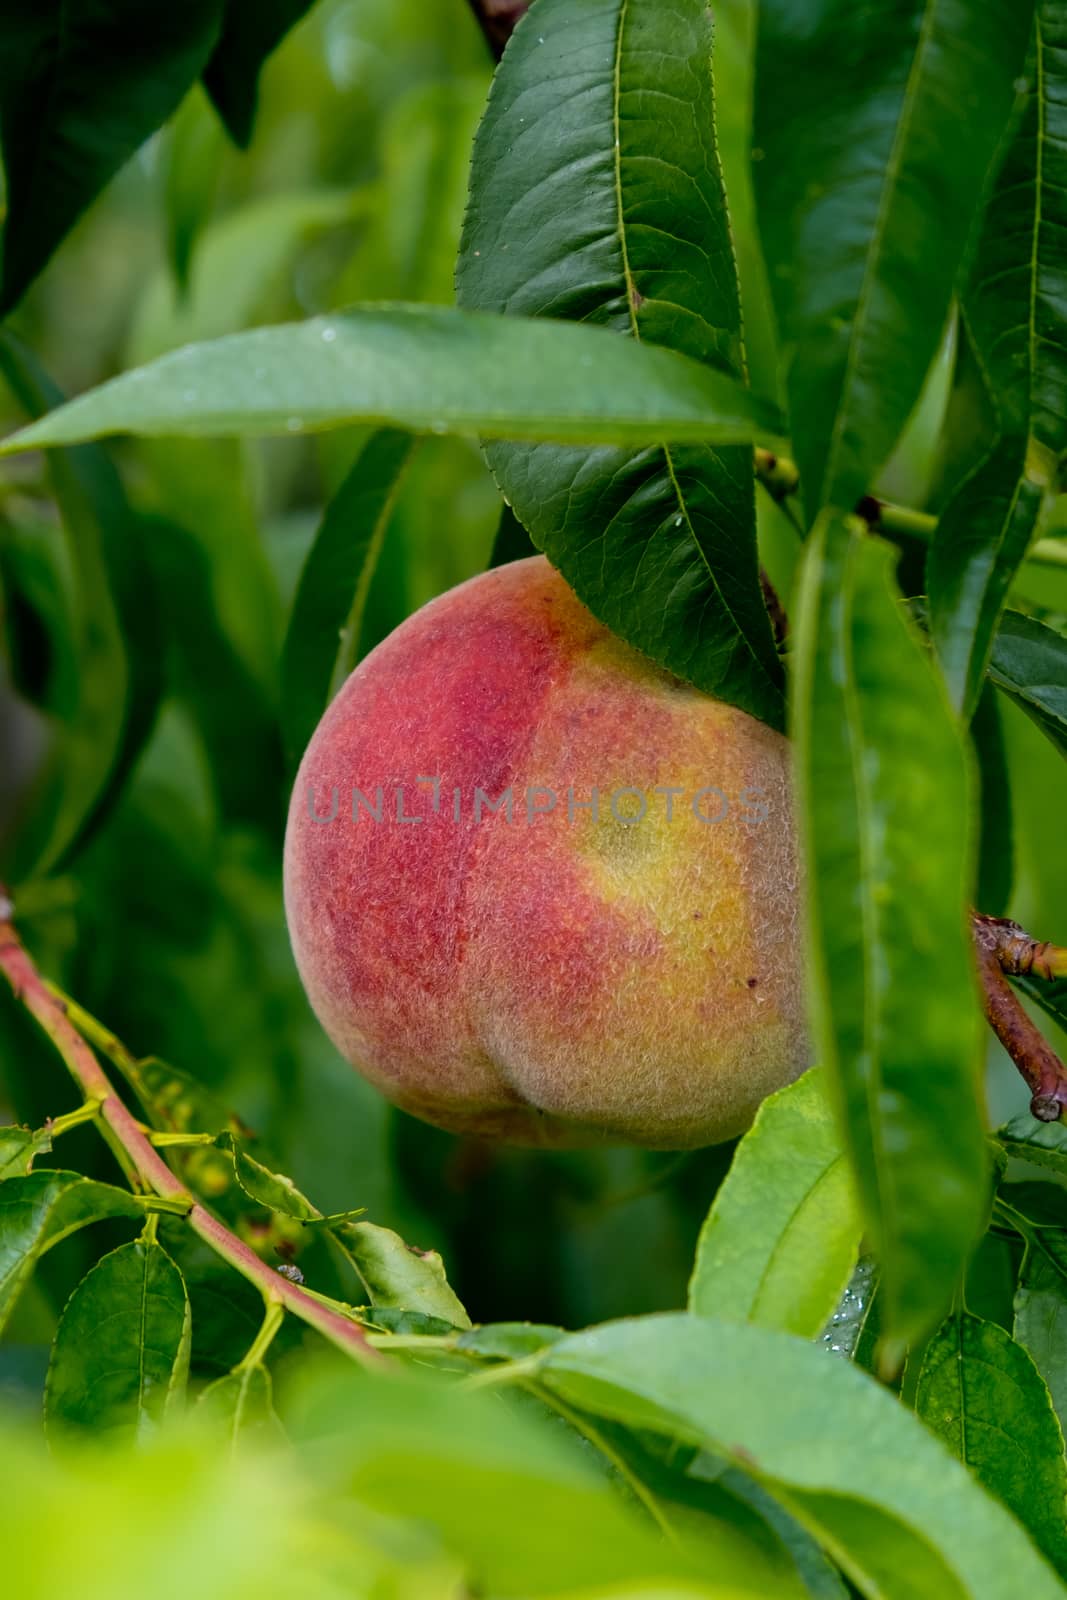 Ripe peach on a tree among the foliage.